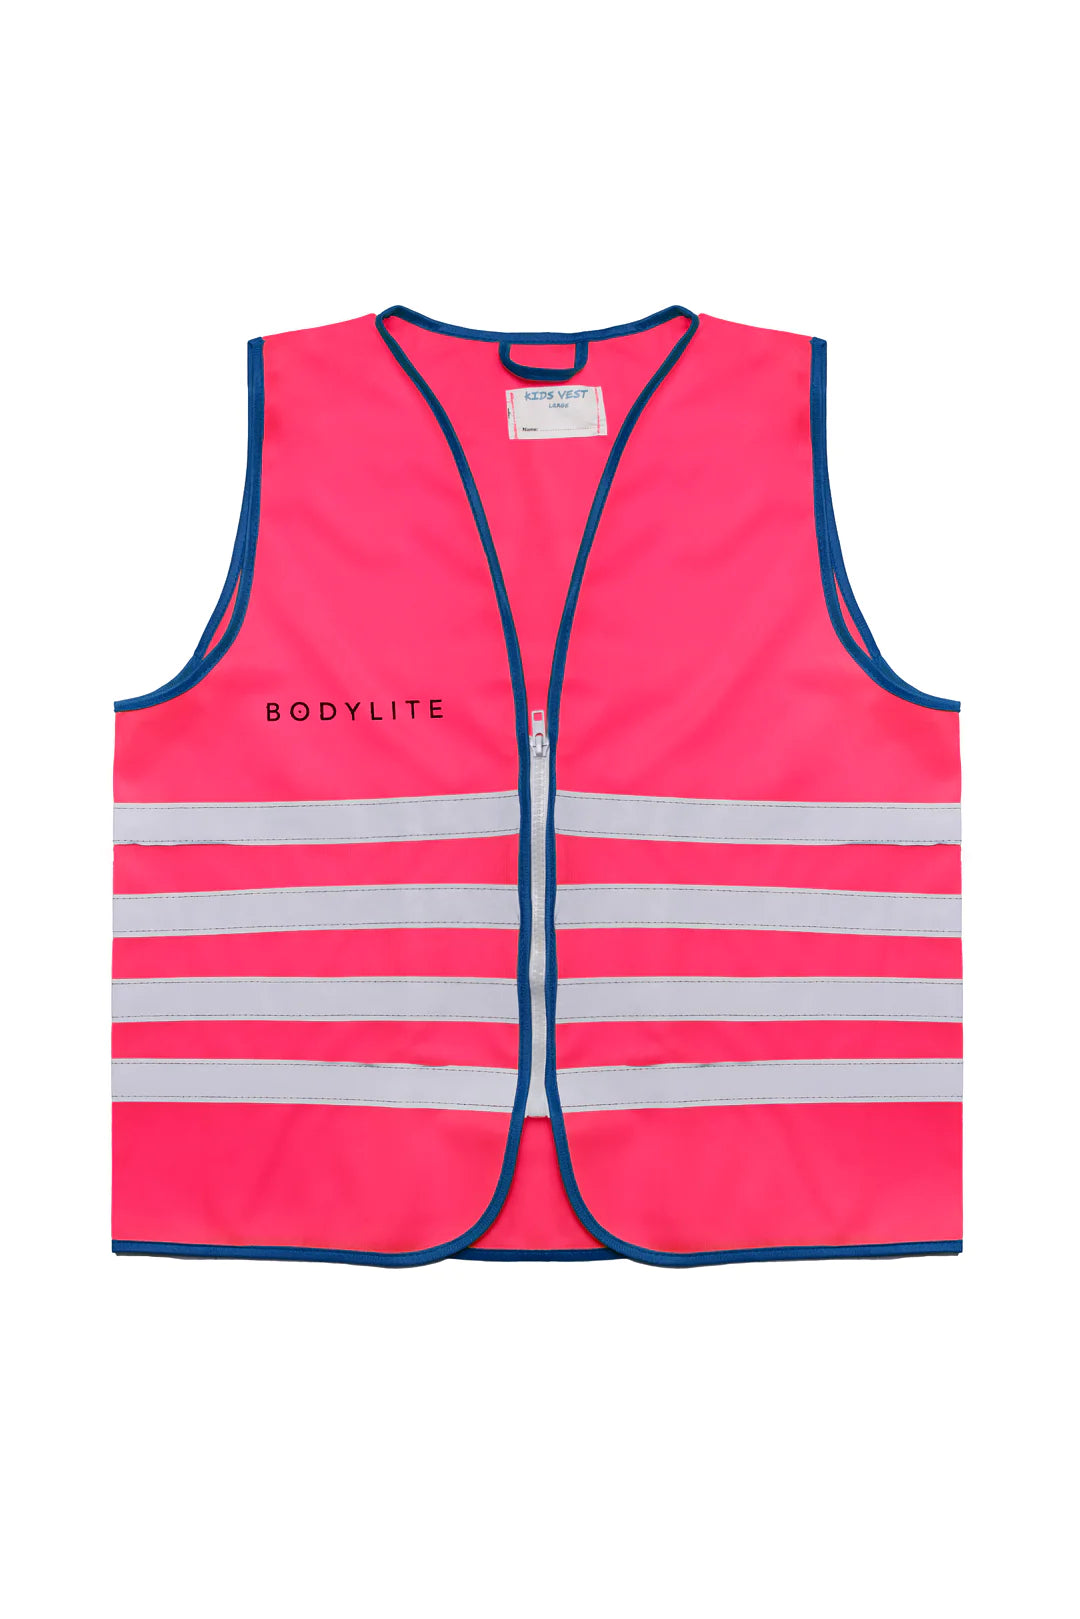 Bodylite - Kids reflective vest